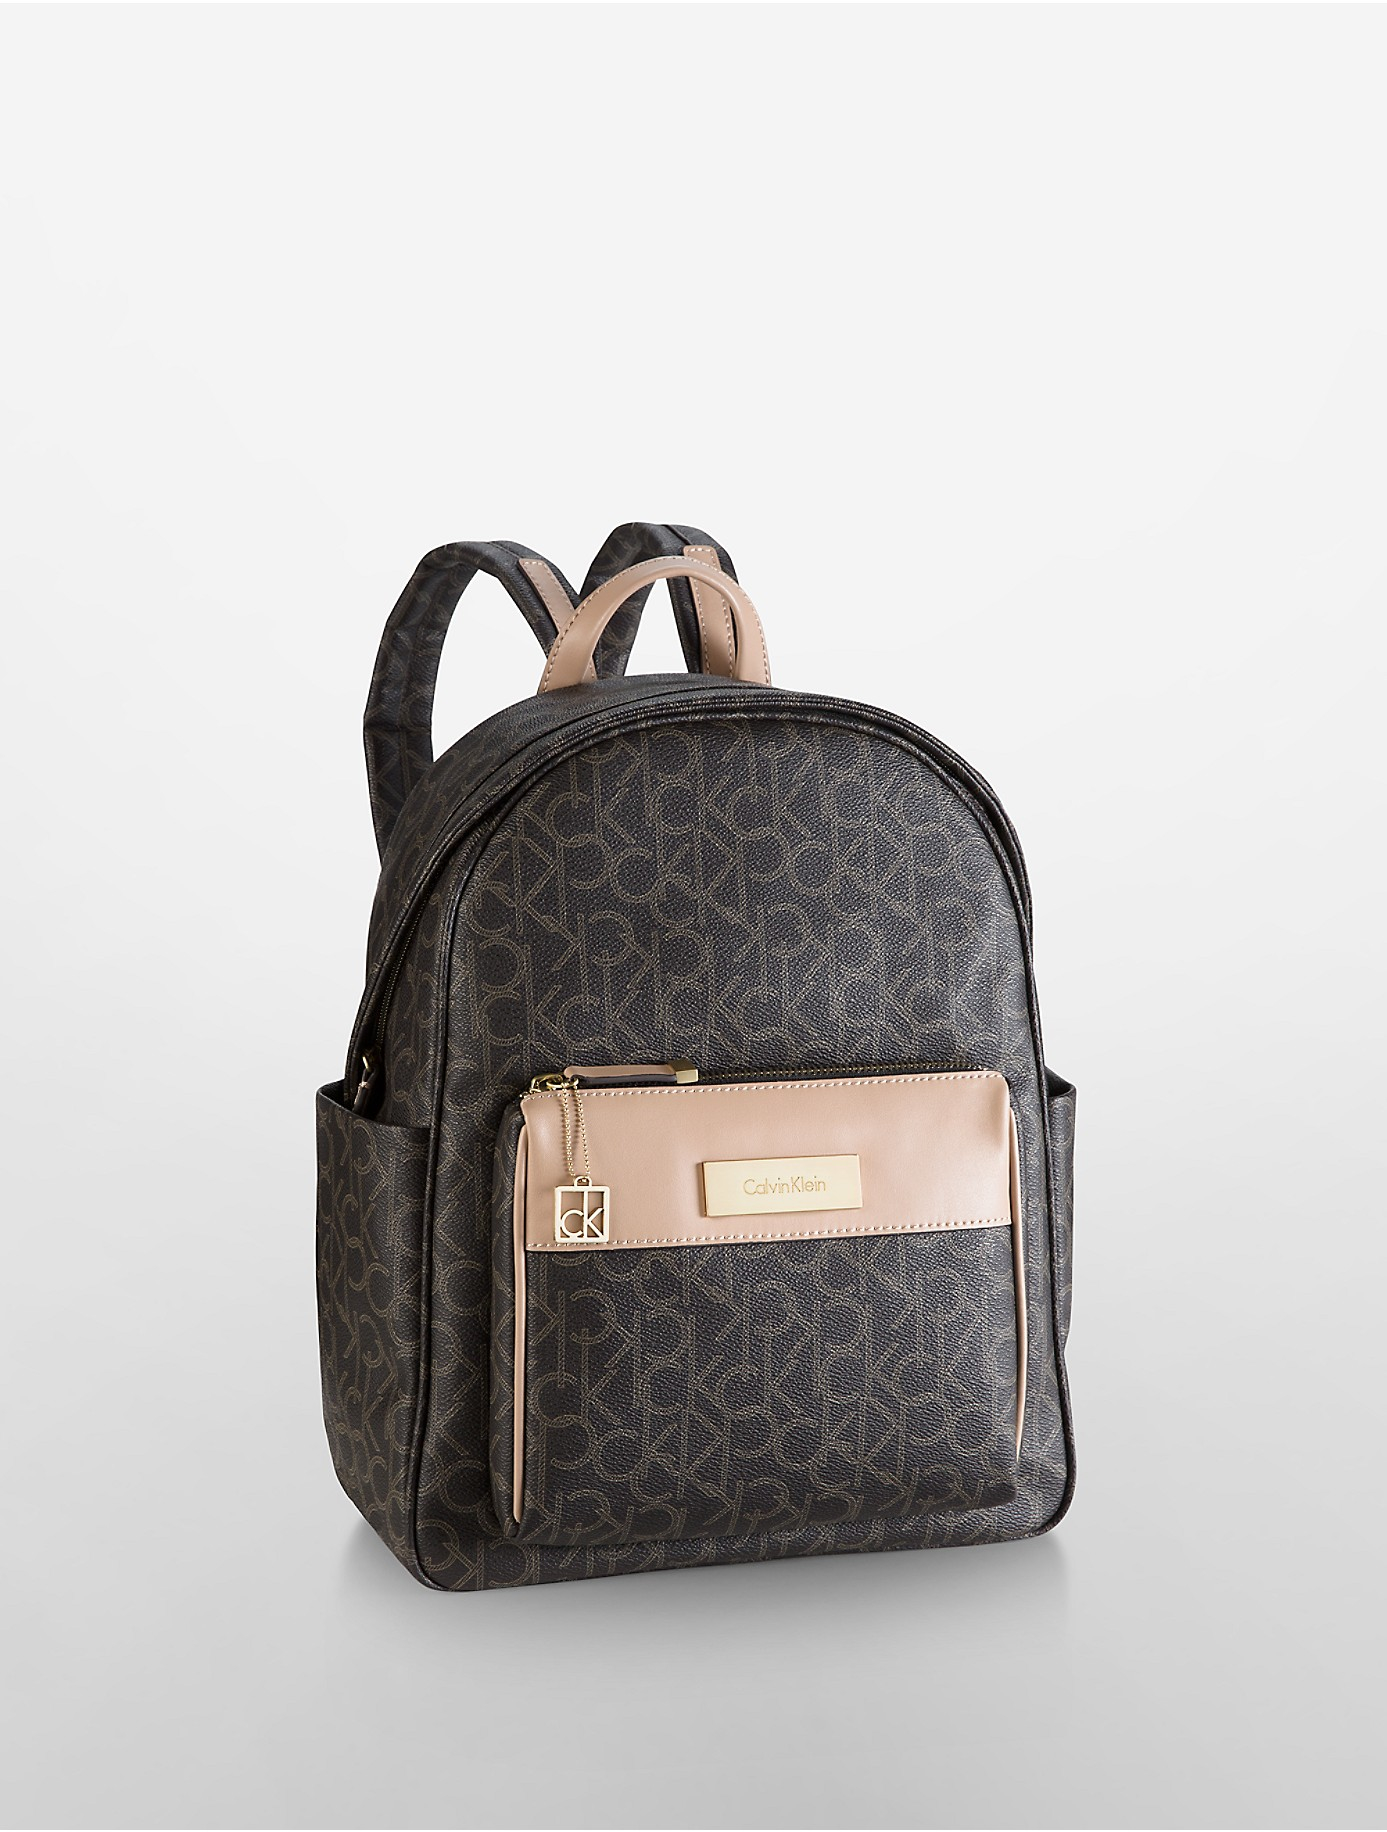 Calvin Klein Leather Jordan Logo Utility Backpack in Brown for Men - Lyst